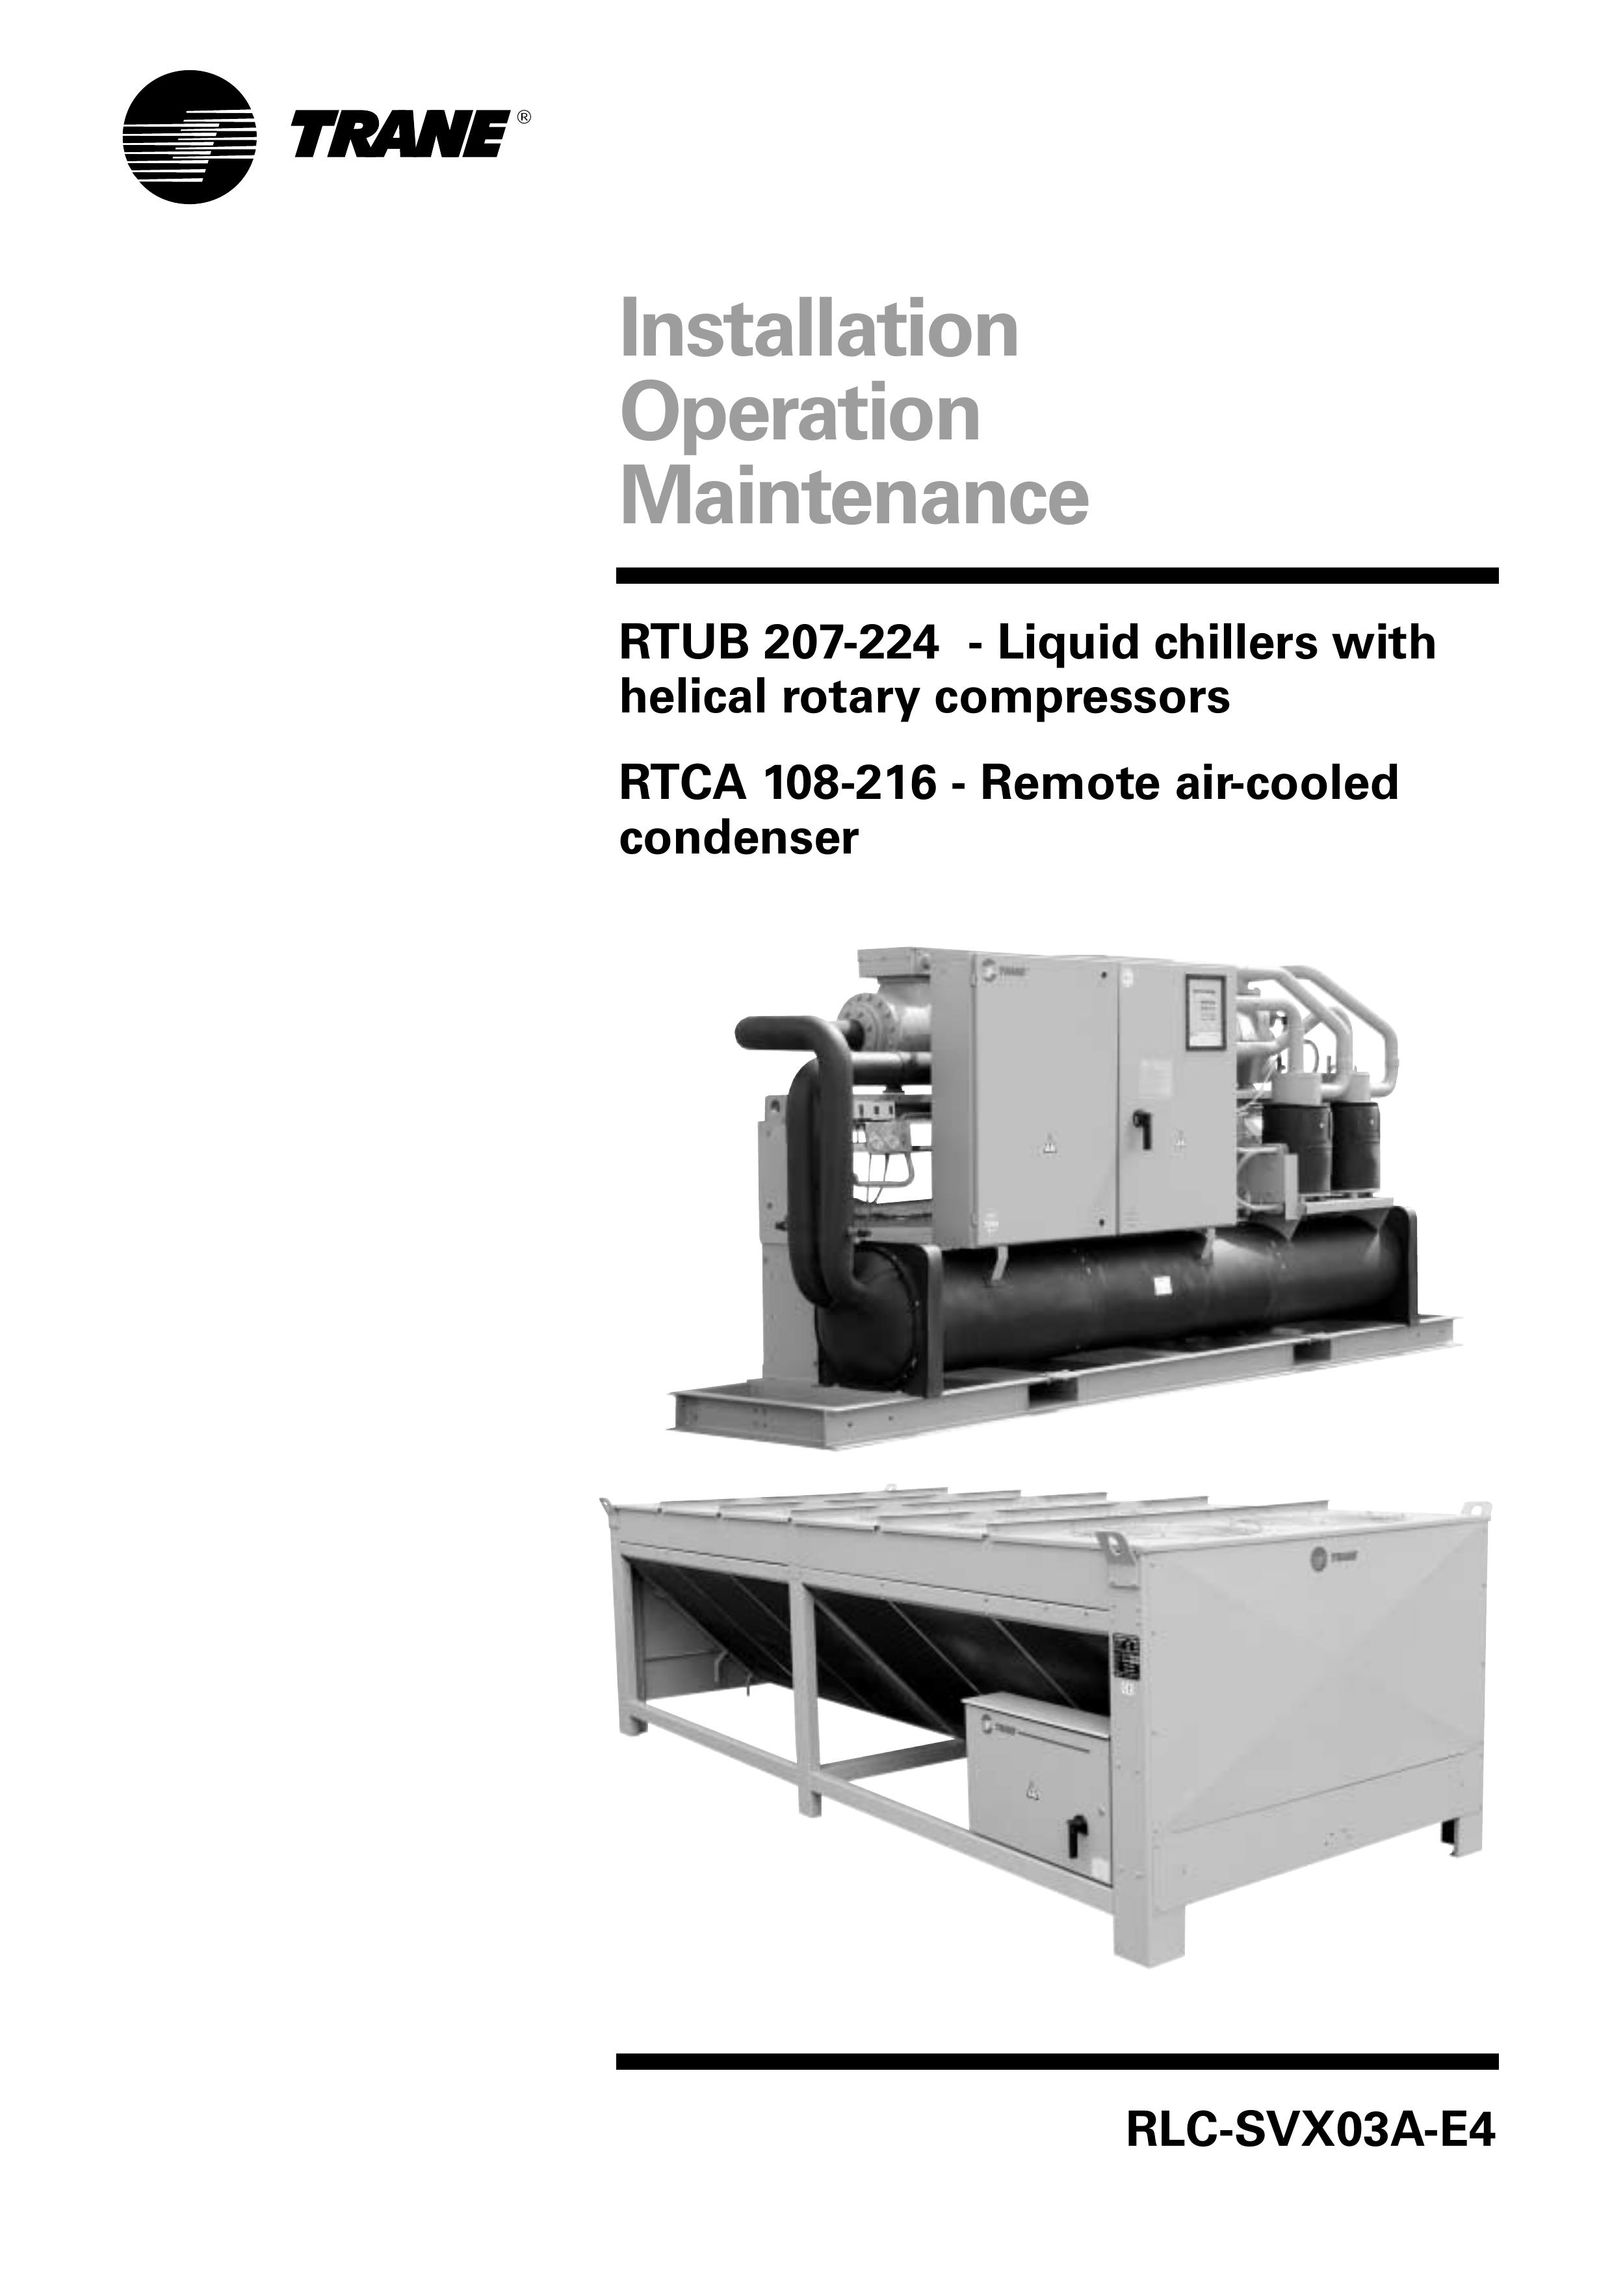 Trane RTUB 207-224 Air Compressor User Manual